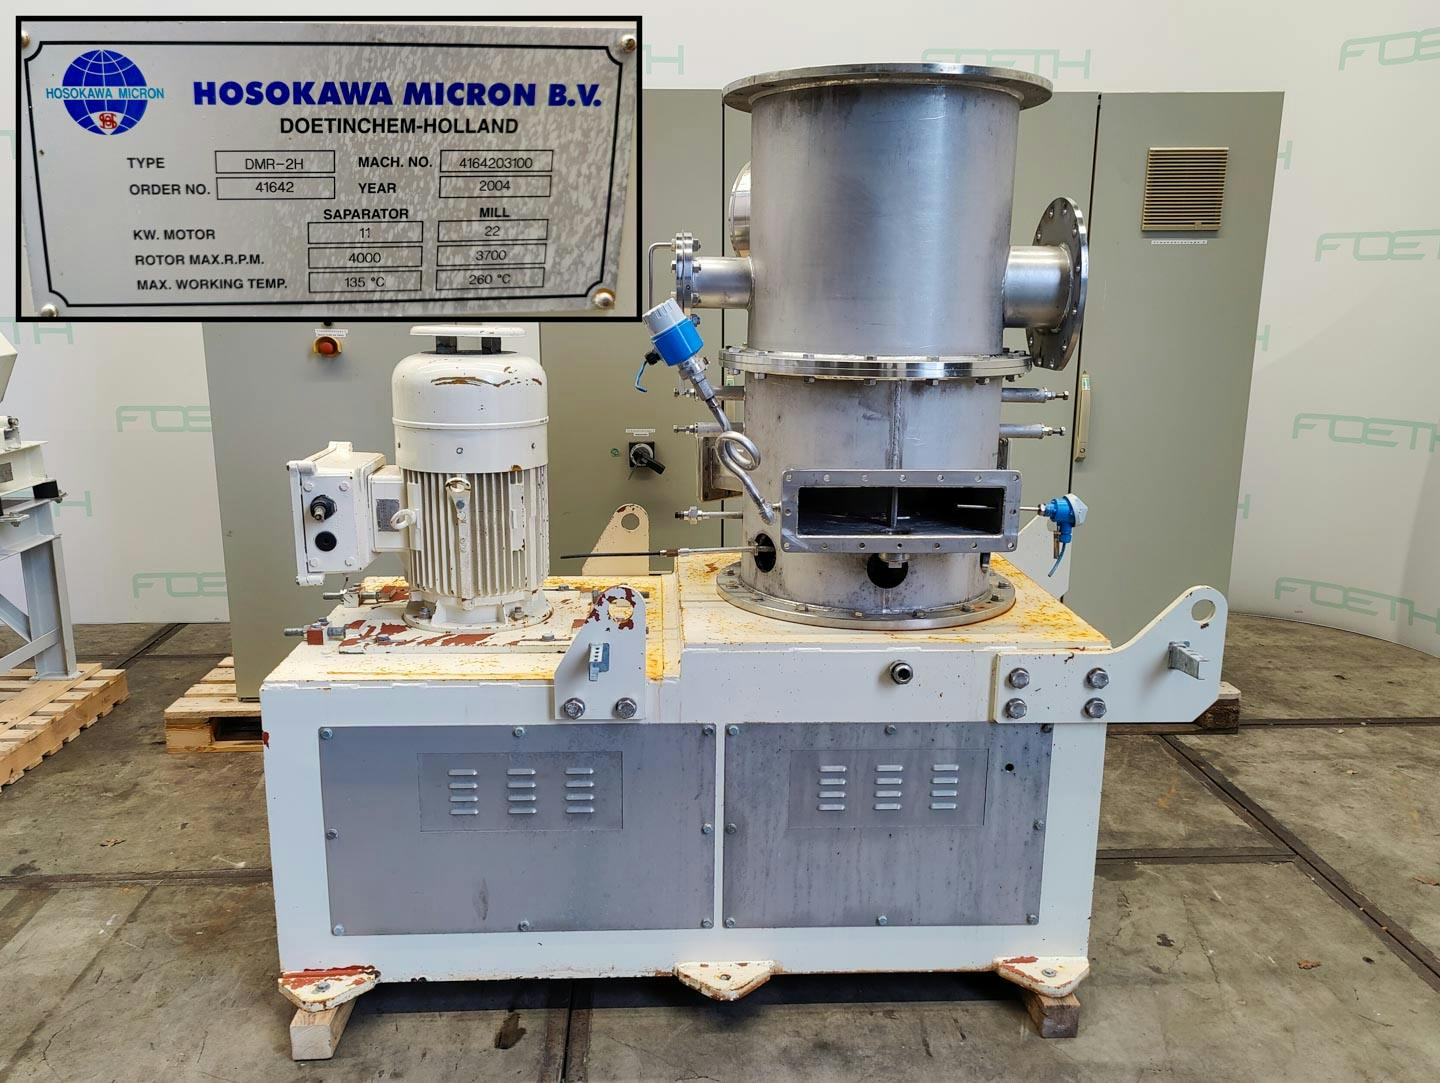 Hosokawa Micron DMR-2H FLASH-DROGER - Drying system - Suszarka - suszenie ciągłe - image 4